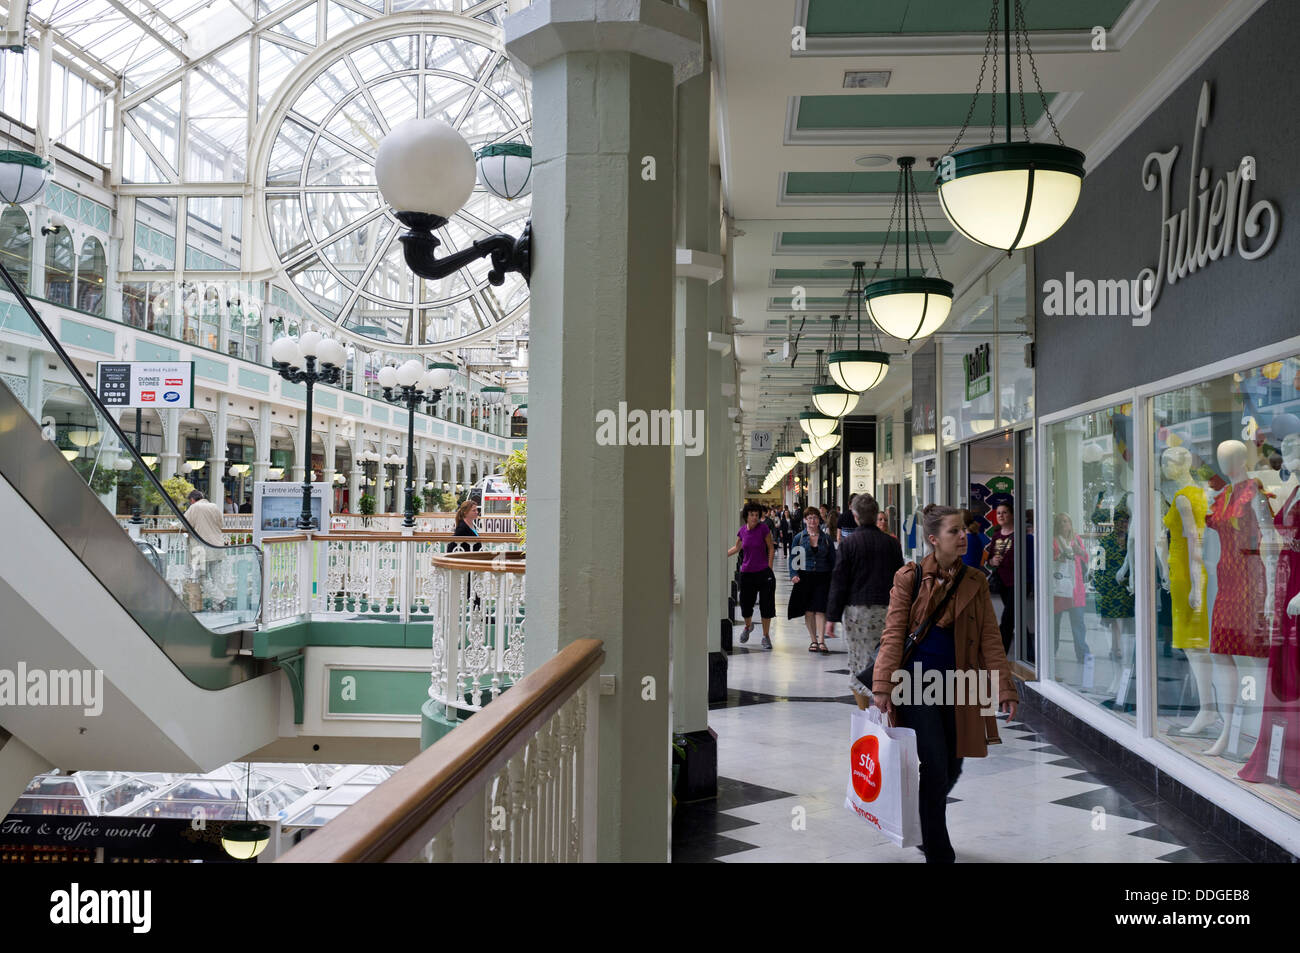 St Stephens green shopping centre, interior with escalators and clock, Dublin, Ireland, Stock Photo